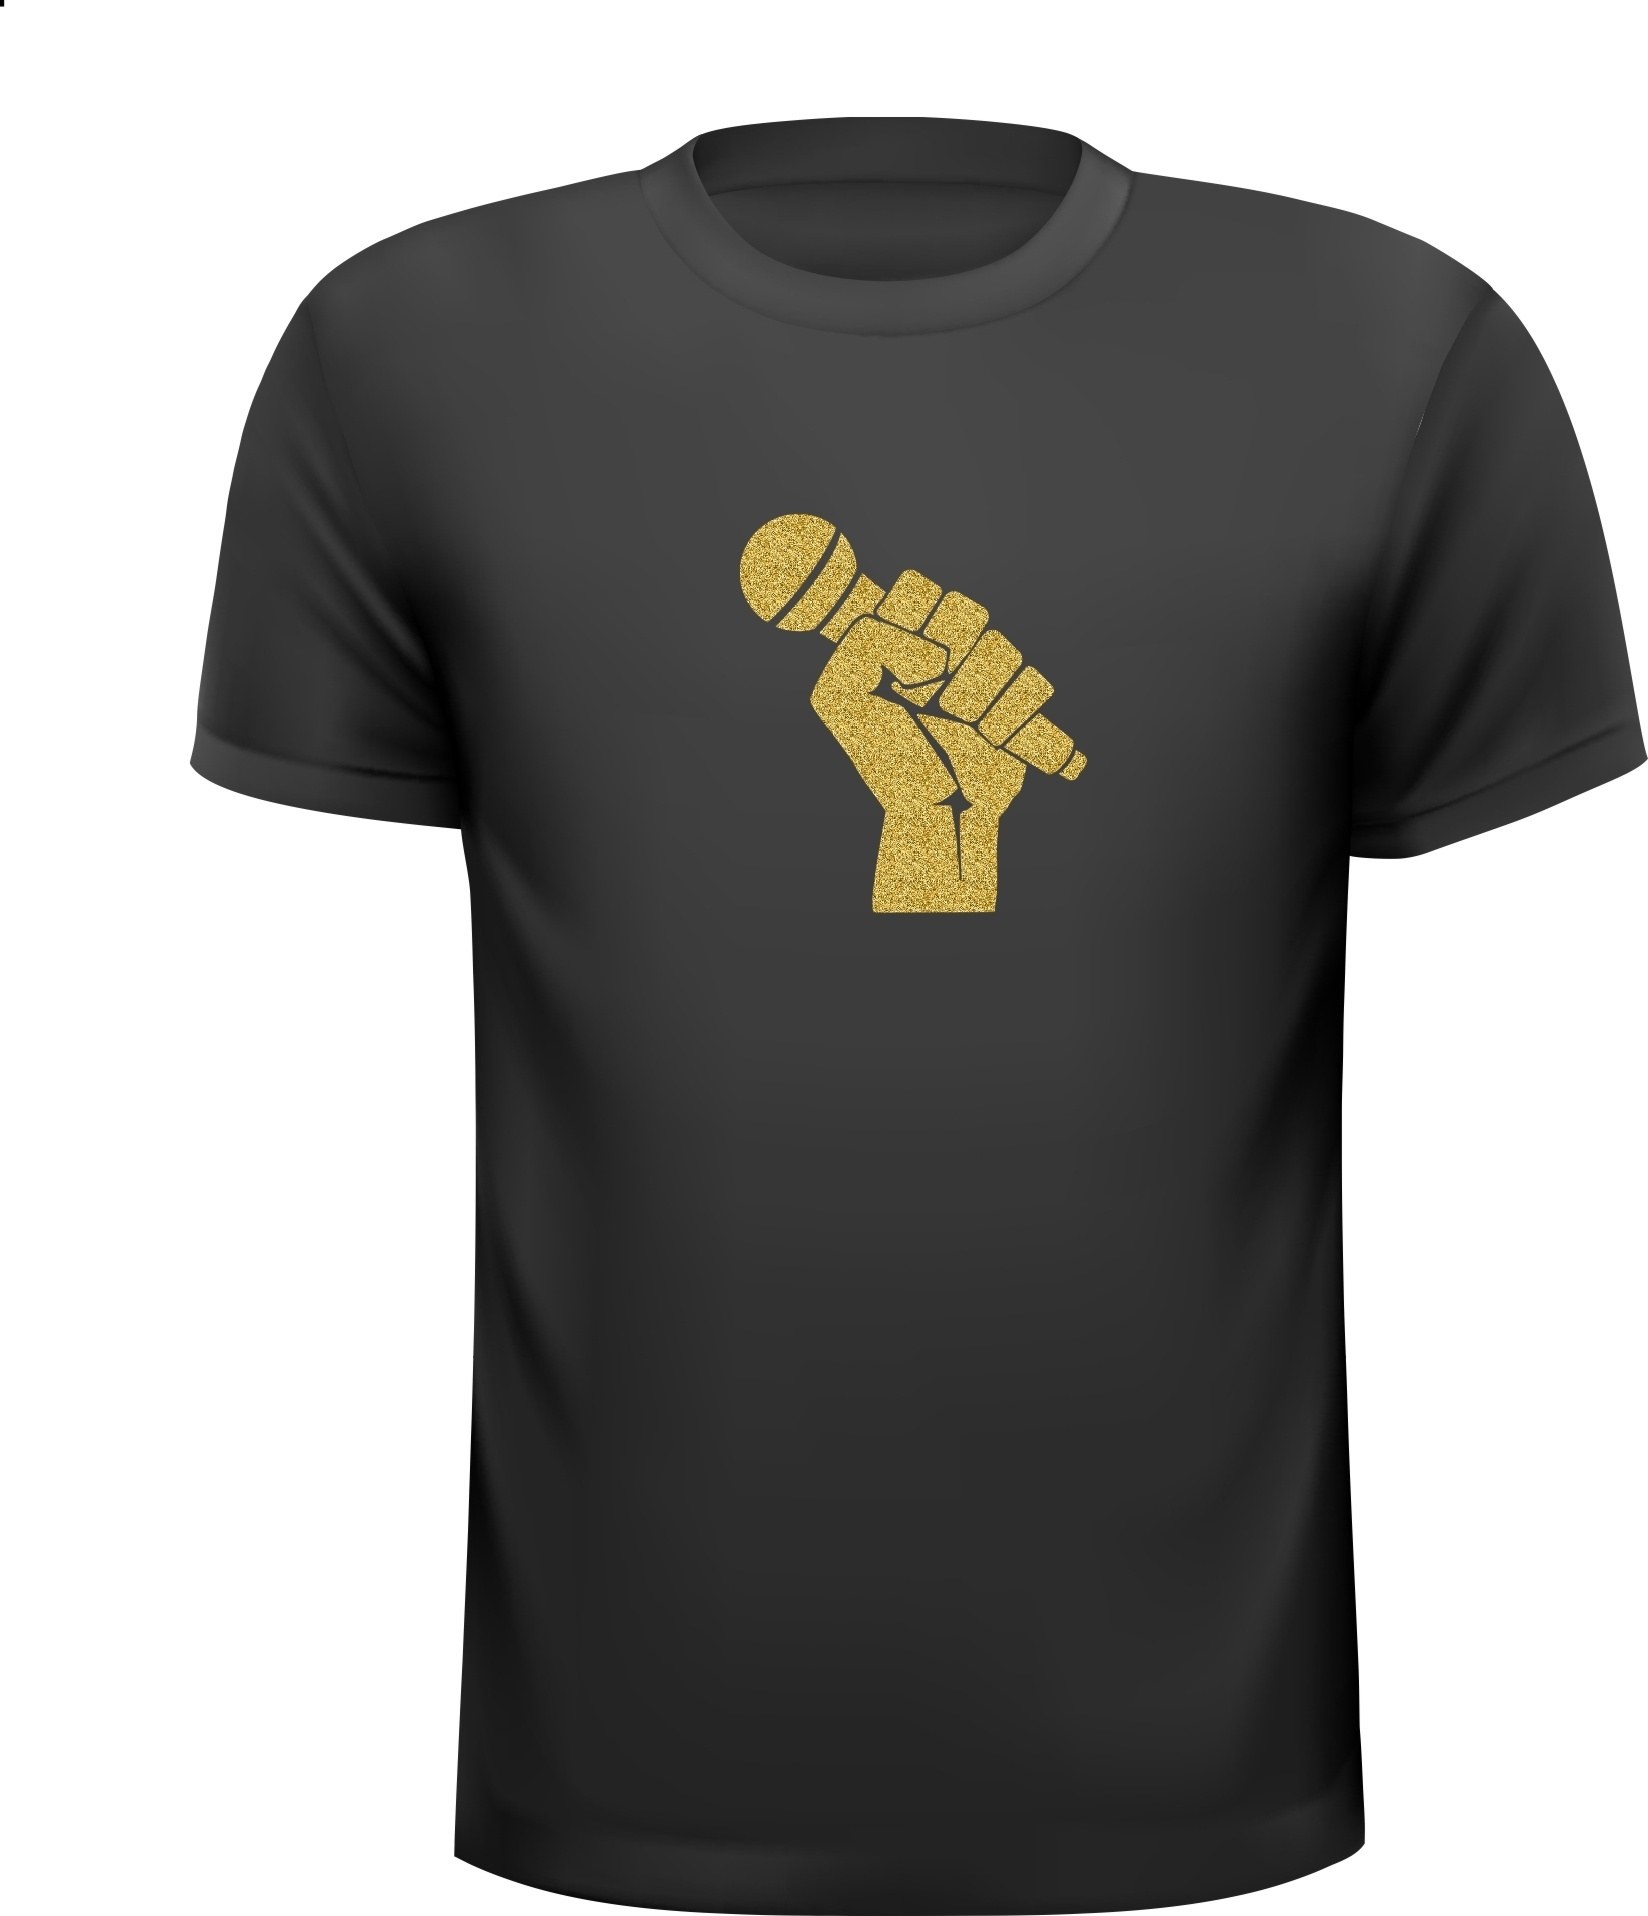 T-shirt microfoon in de hand in het glitter goud super fout